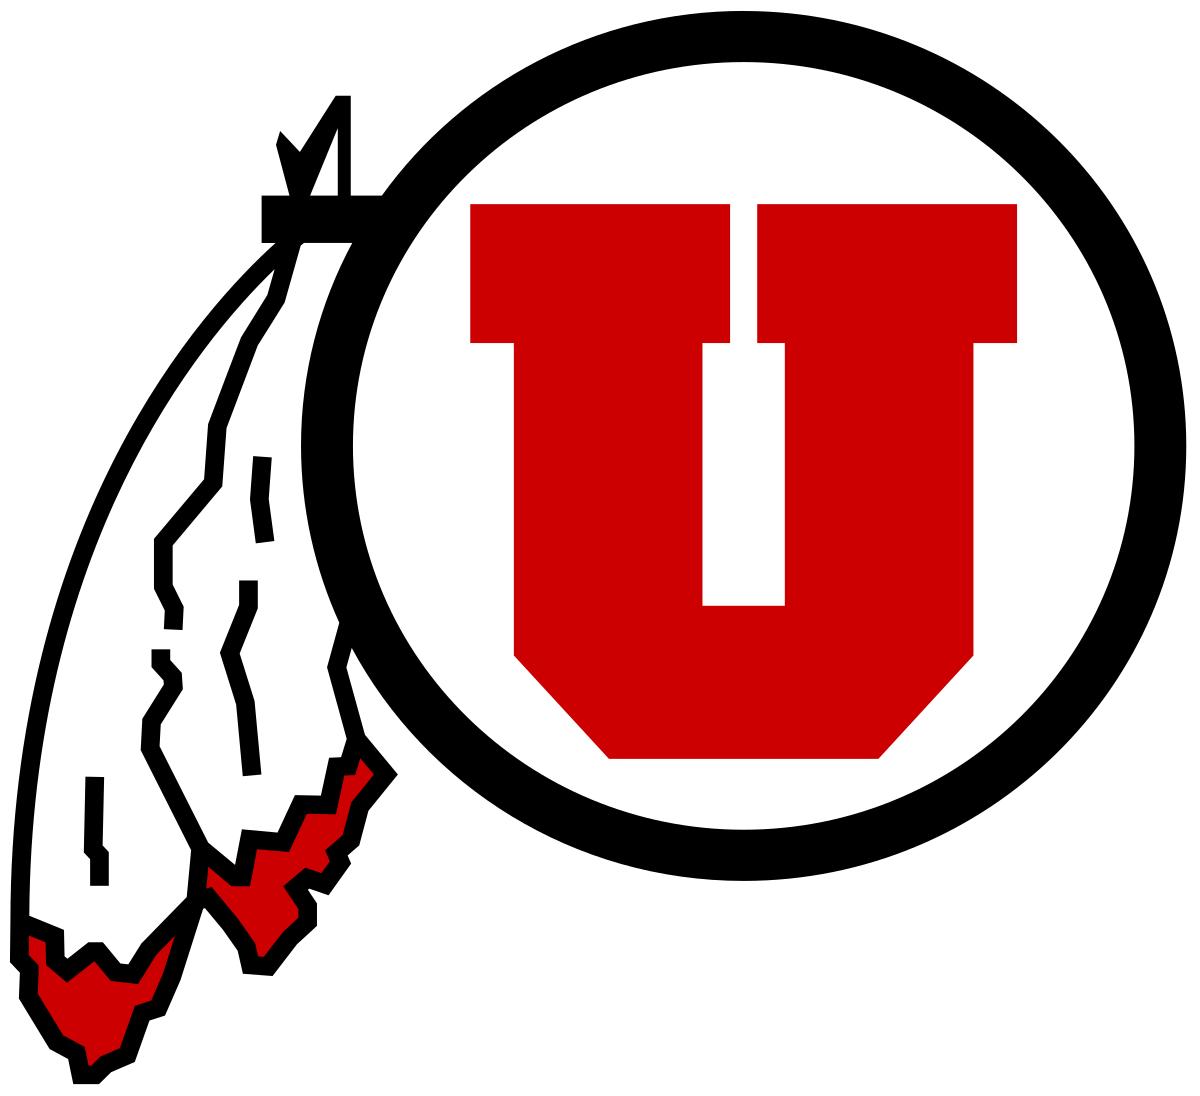 Utah utes football logo